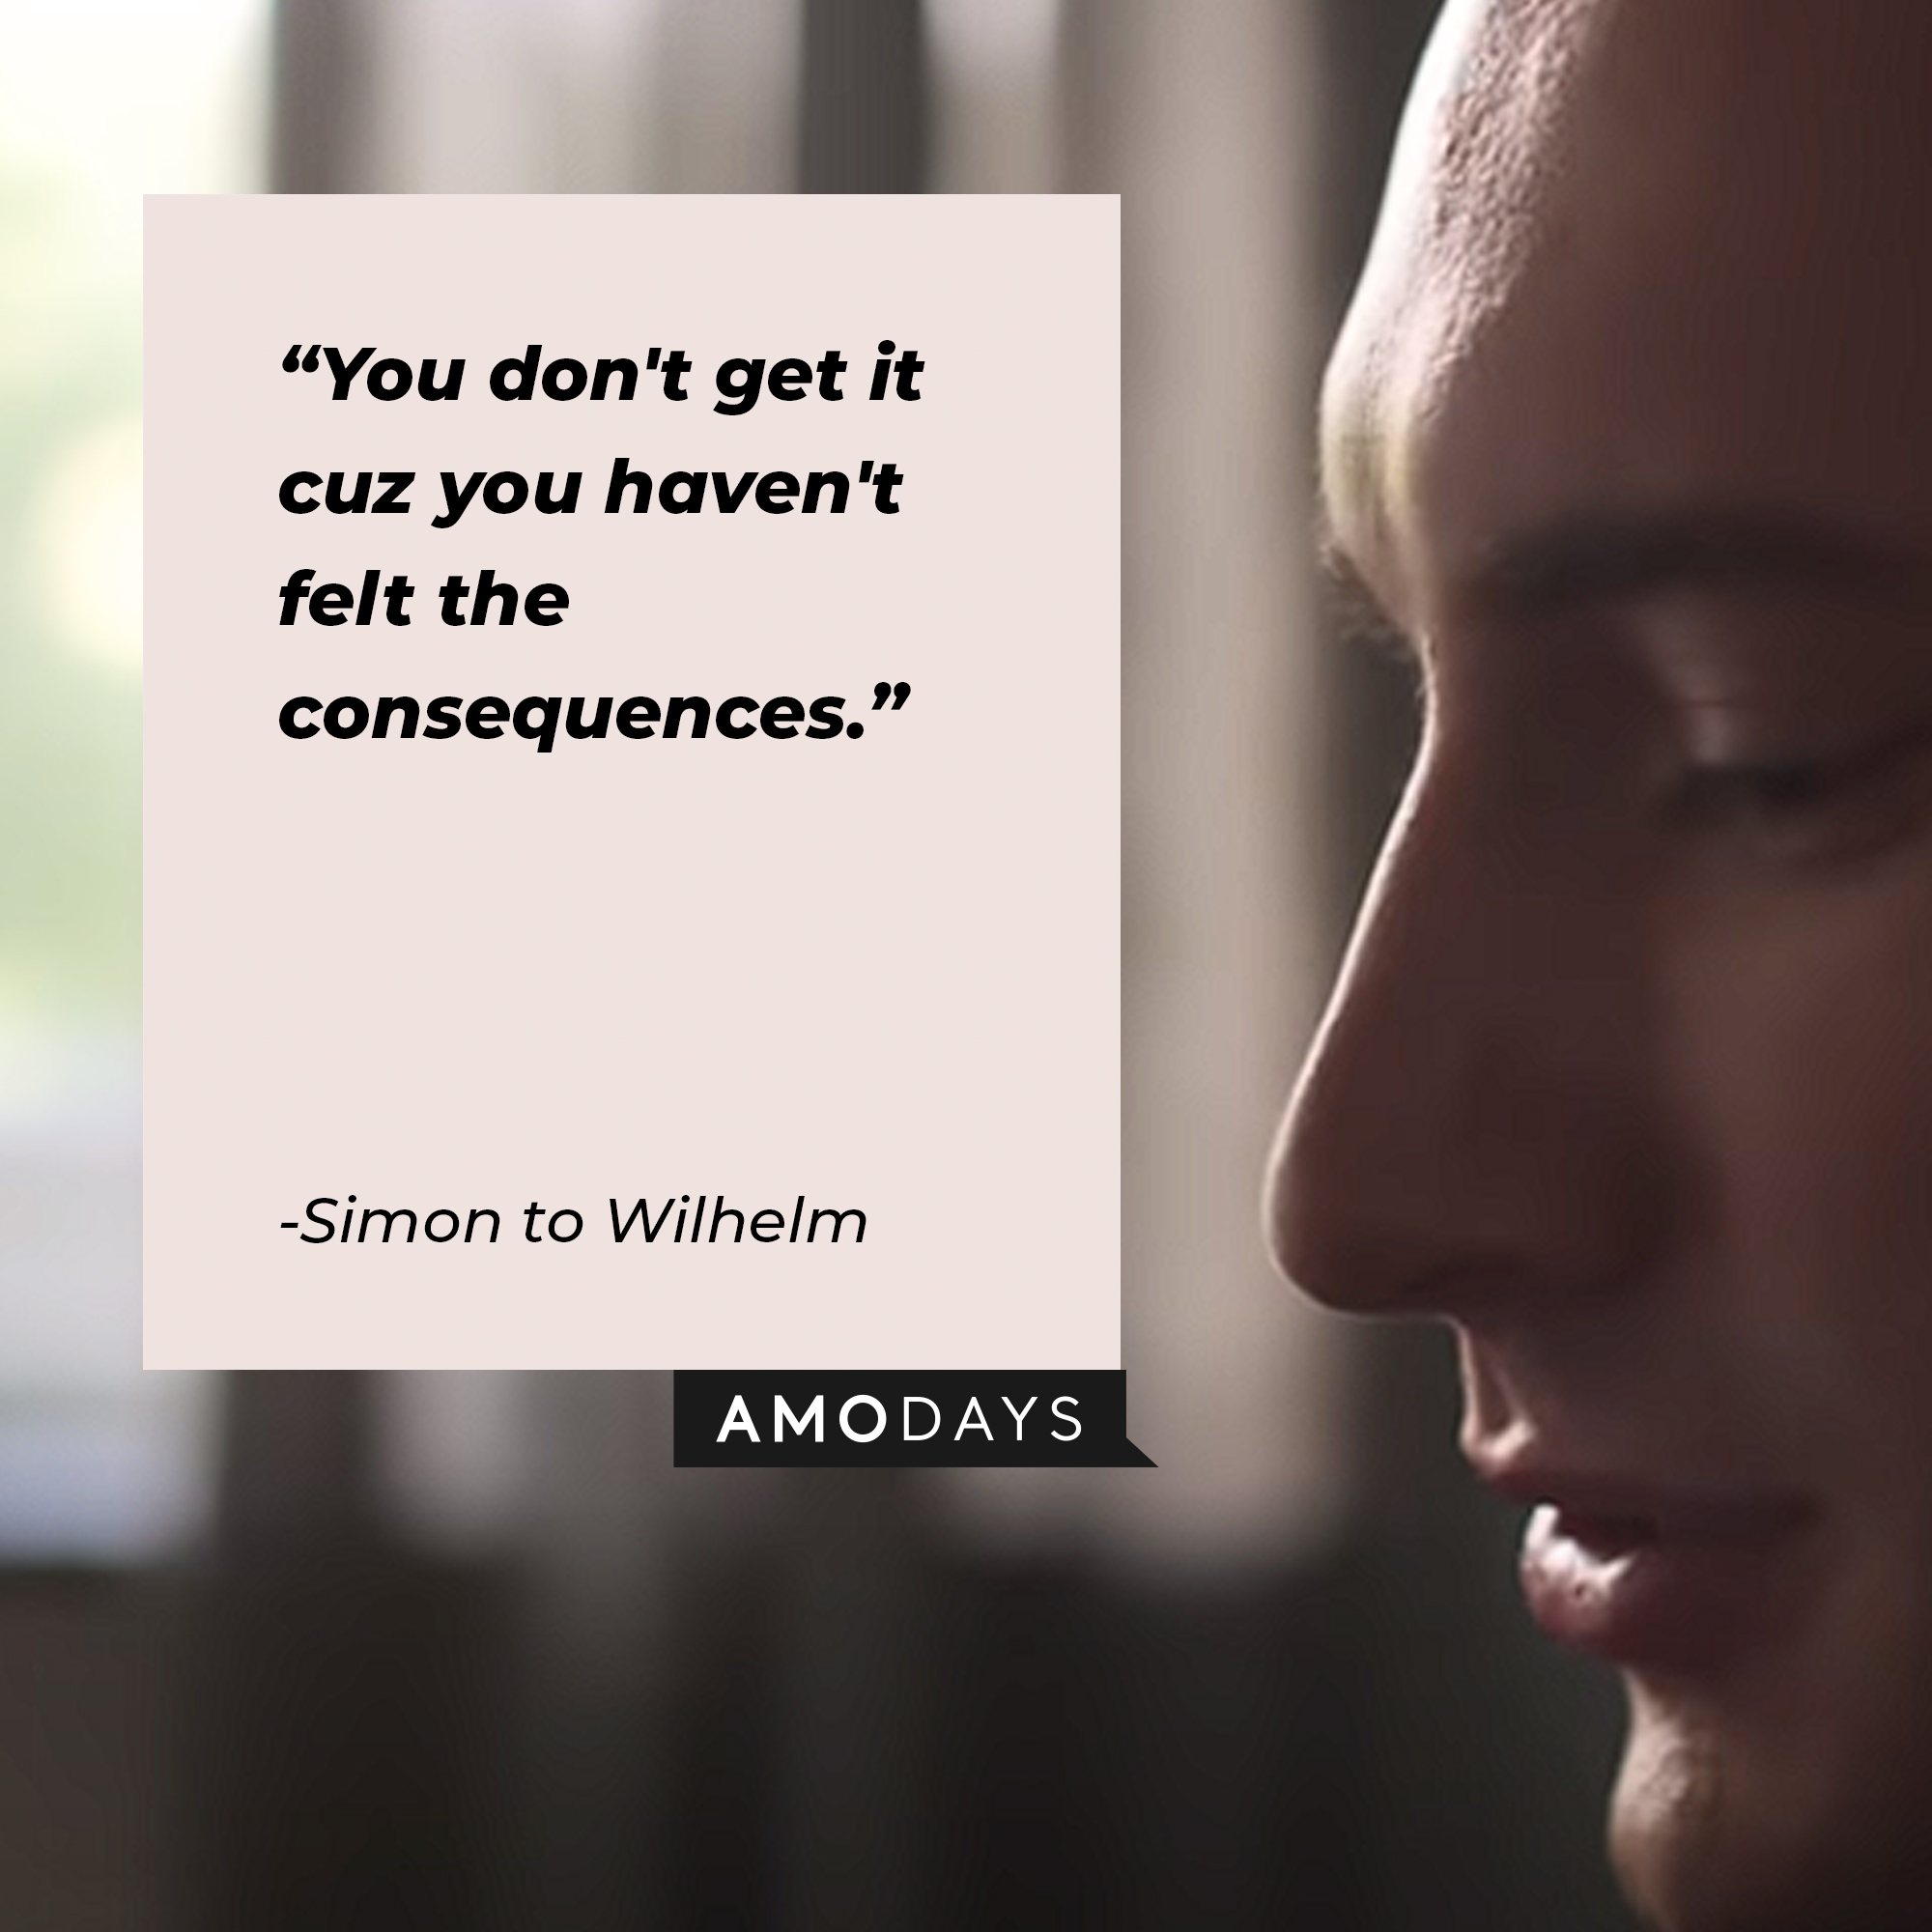 Simon’s quote: "You don't get it cuz you haven't felt the consequences."  | Image: Youtube.com/Netflix